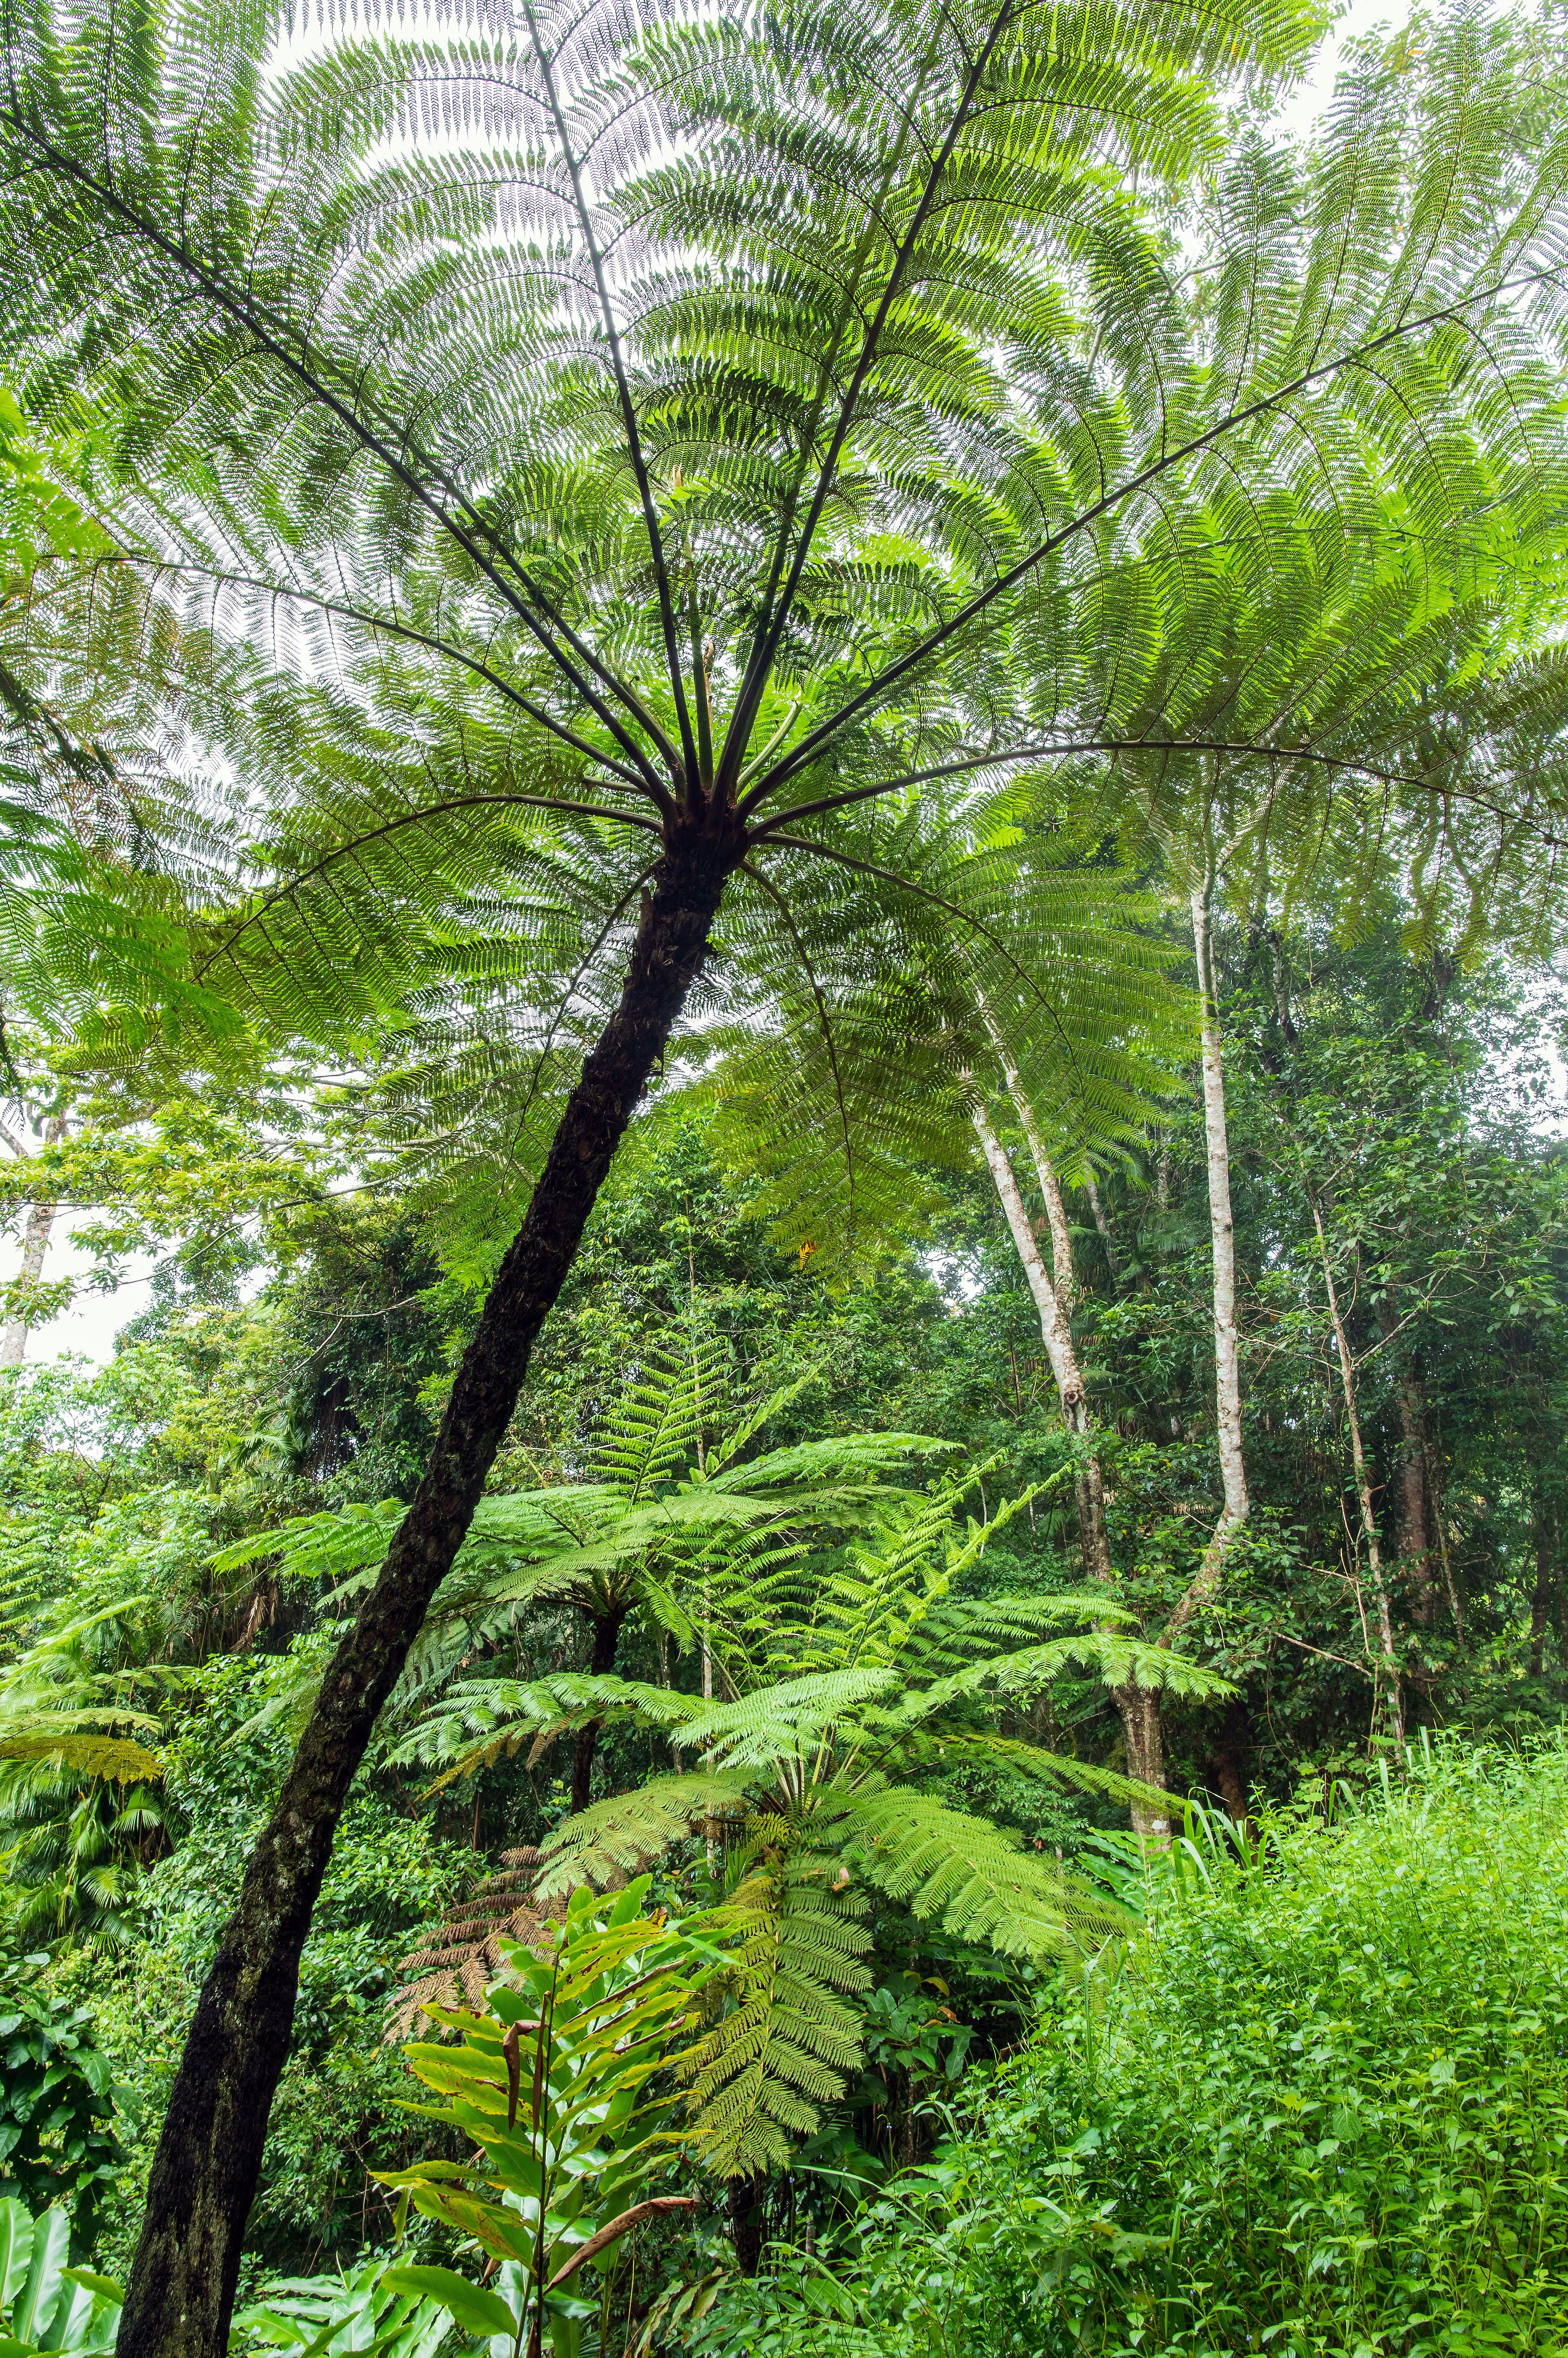 Tree ferns in the rain forest on the Kuranda Range near Cairns in Australia.